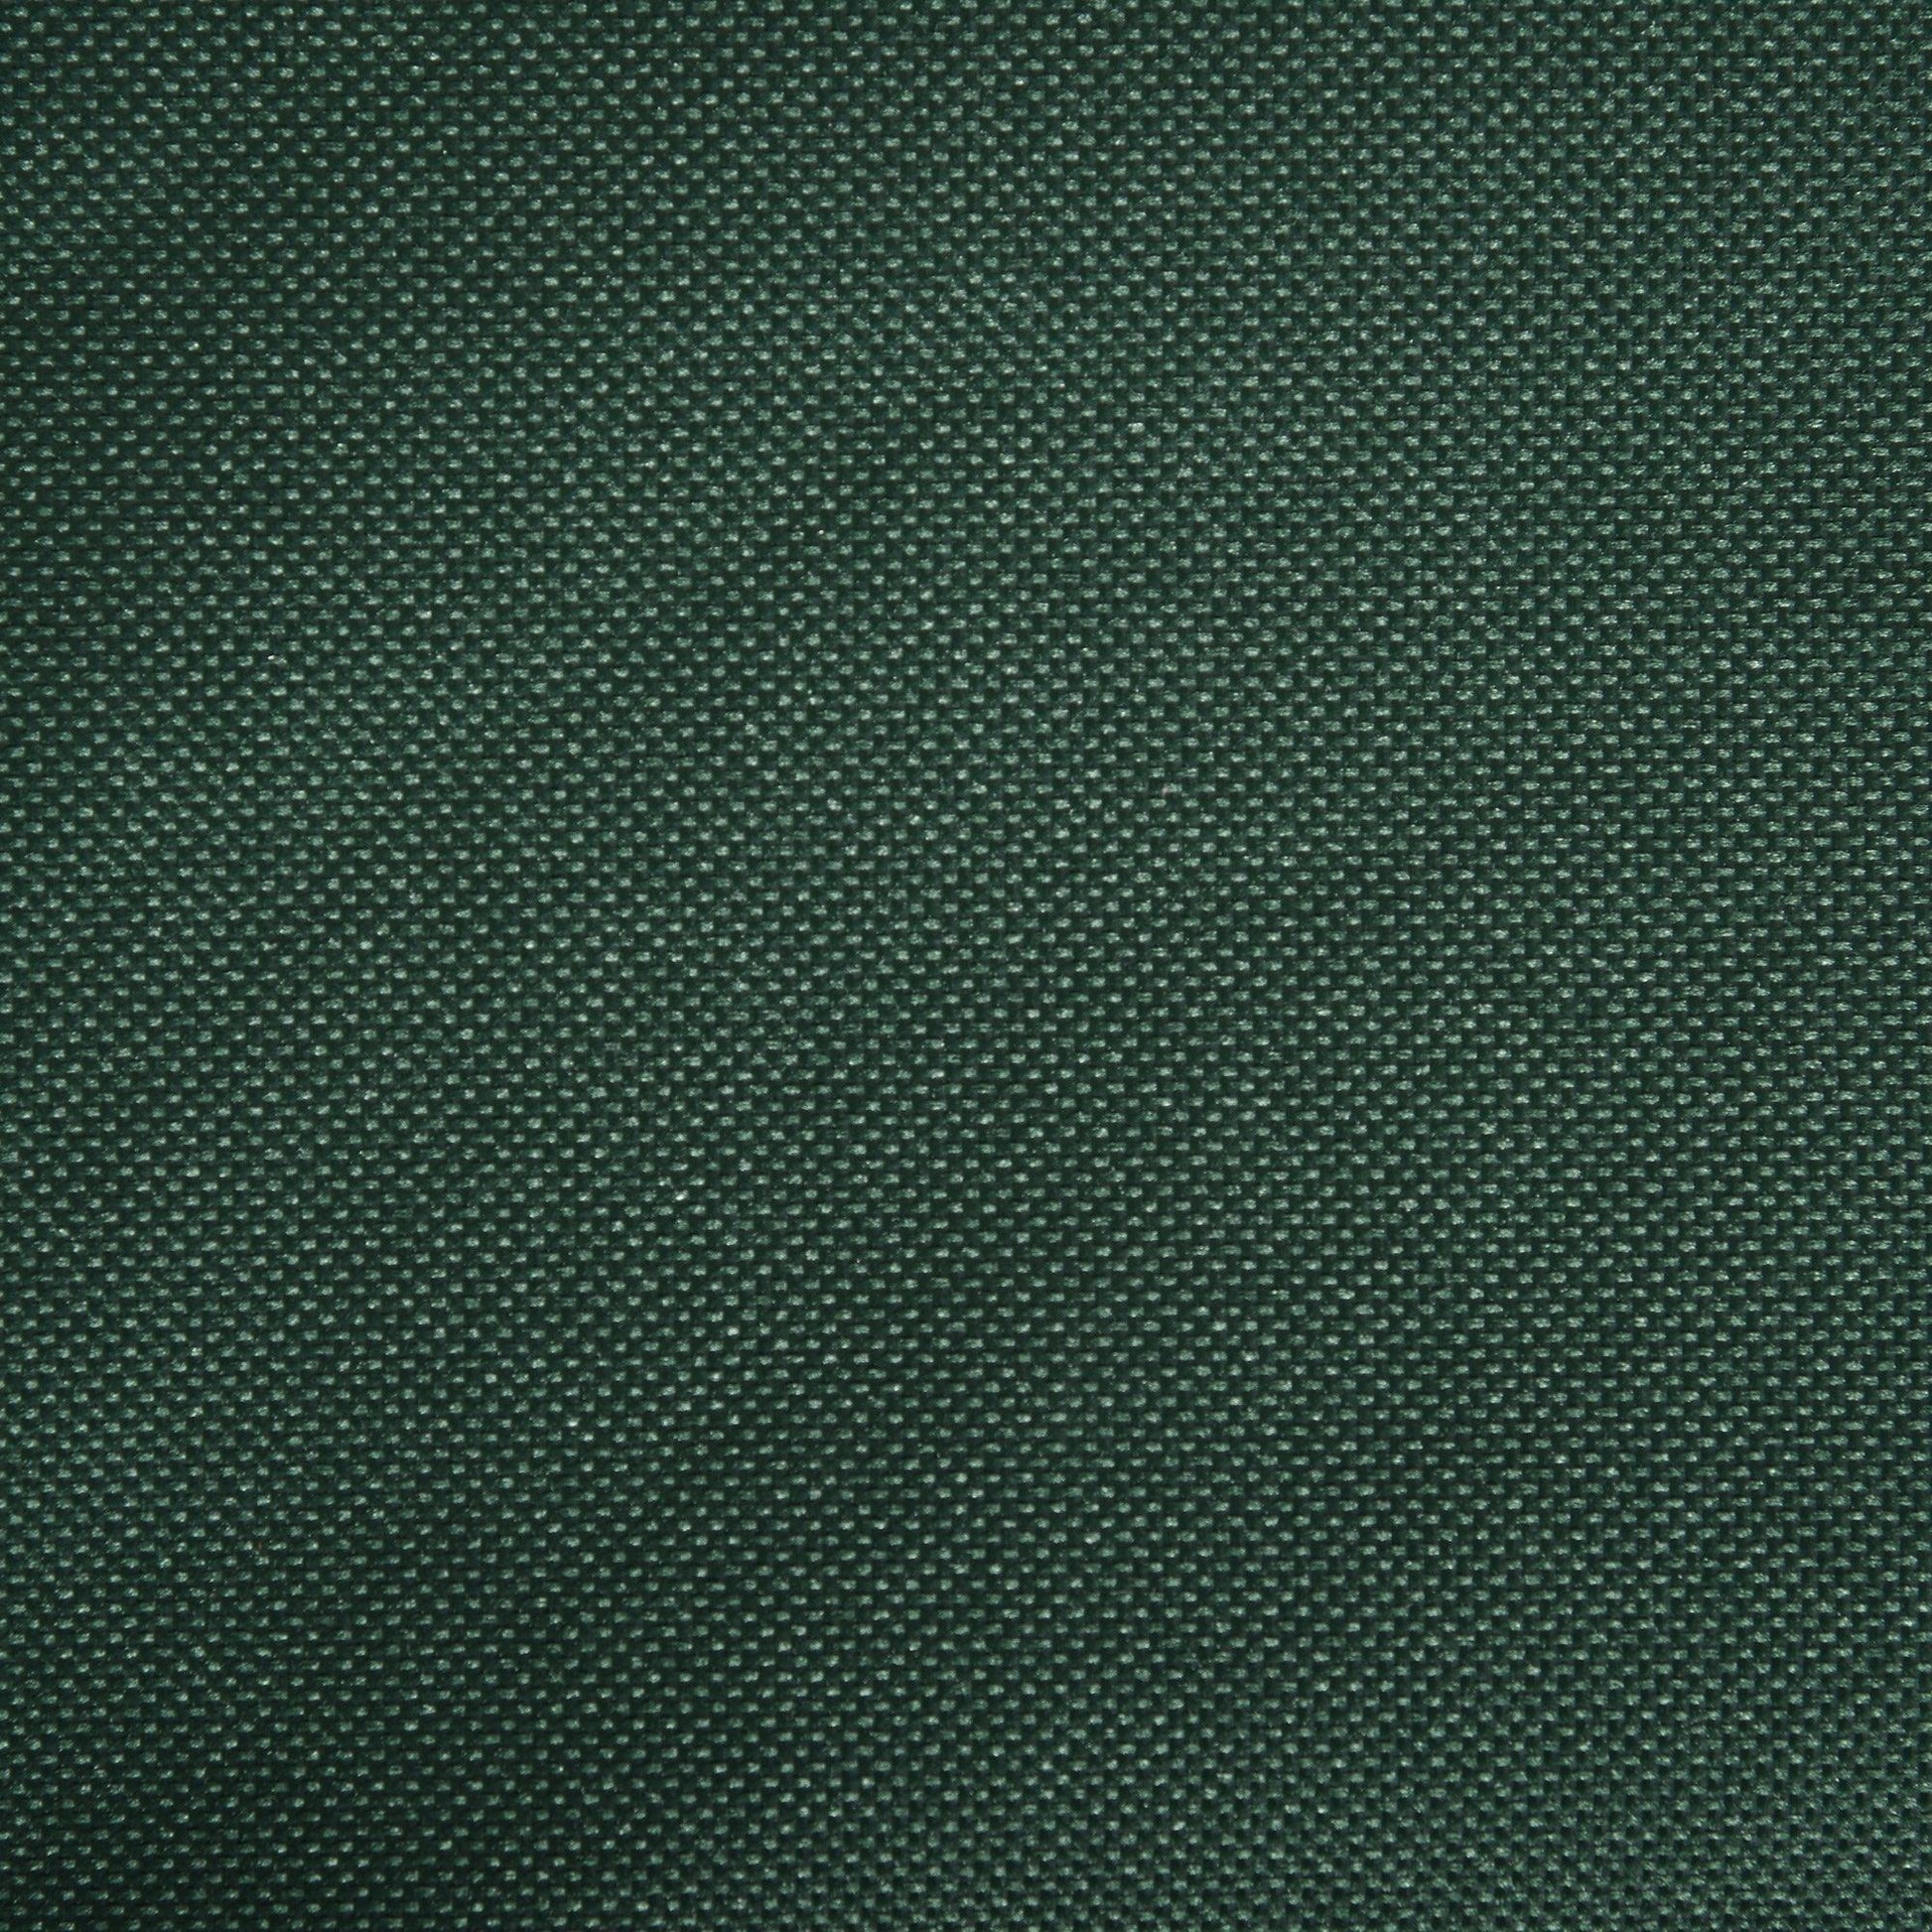 Outsunny Waterproof Patio Set Cover - Green - ALL4U RETAILER LTD